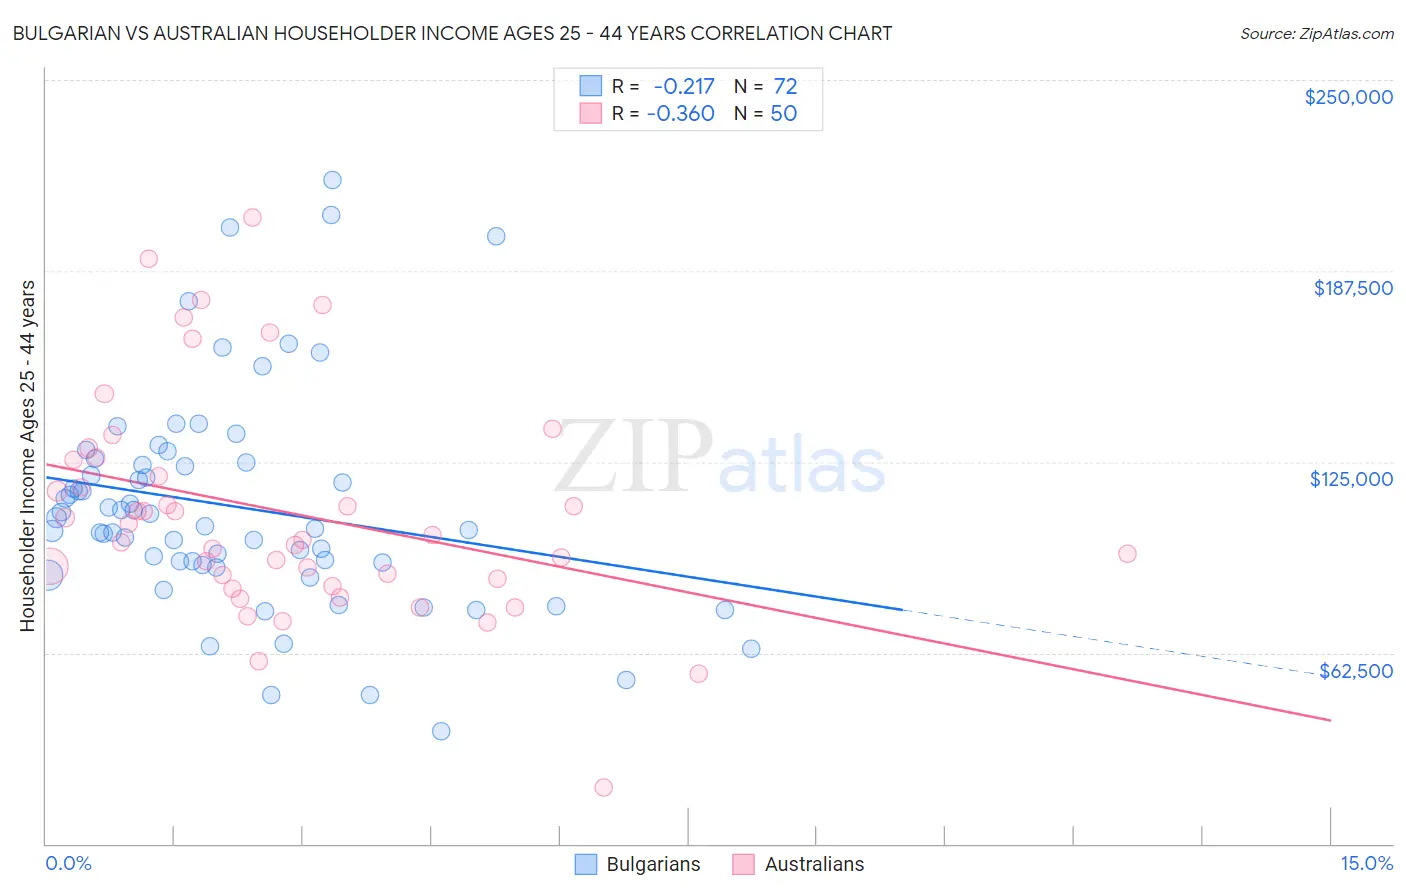 Bulgarian vs Australian Householder Income Ages 25 - 44 years